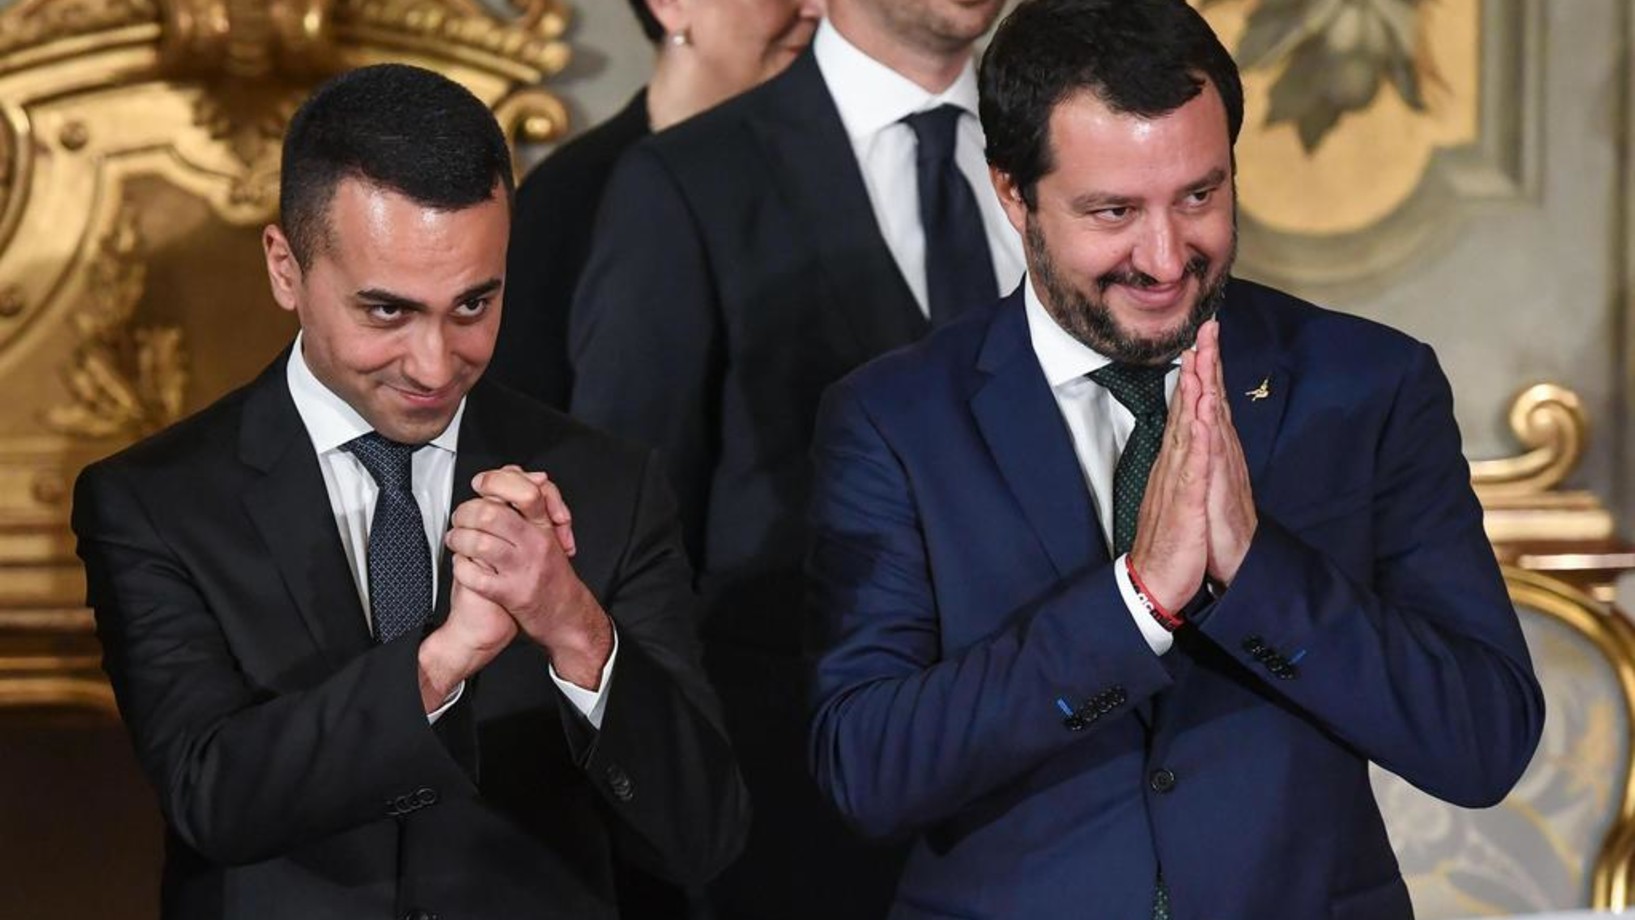 Di Maio, Salvini am Freitag nach der Amtseinsetzung (Foto: Keystone/EPA/Claudio Peri)